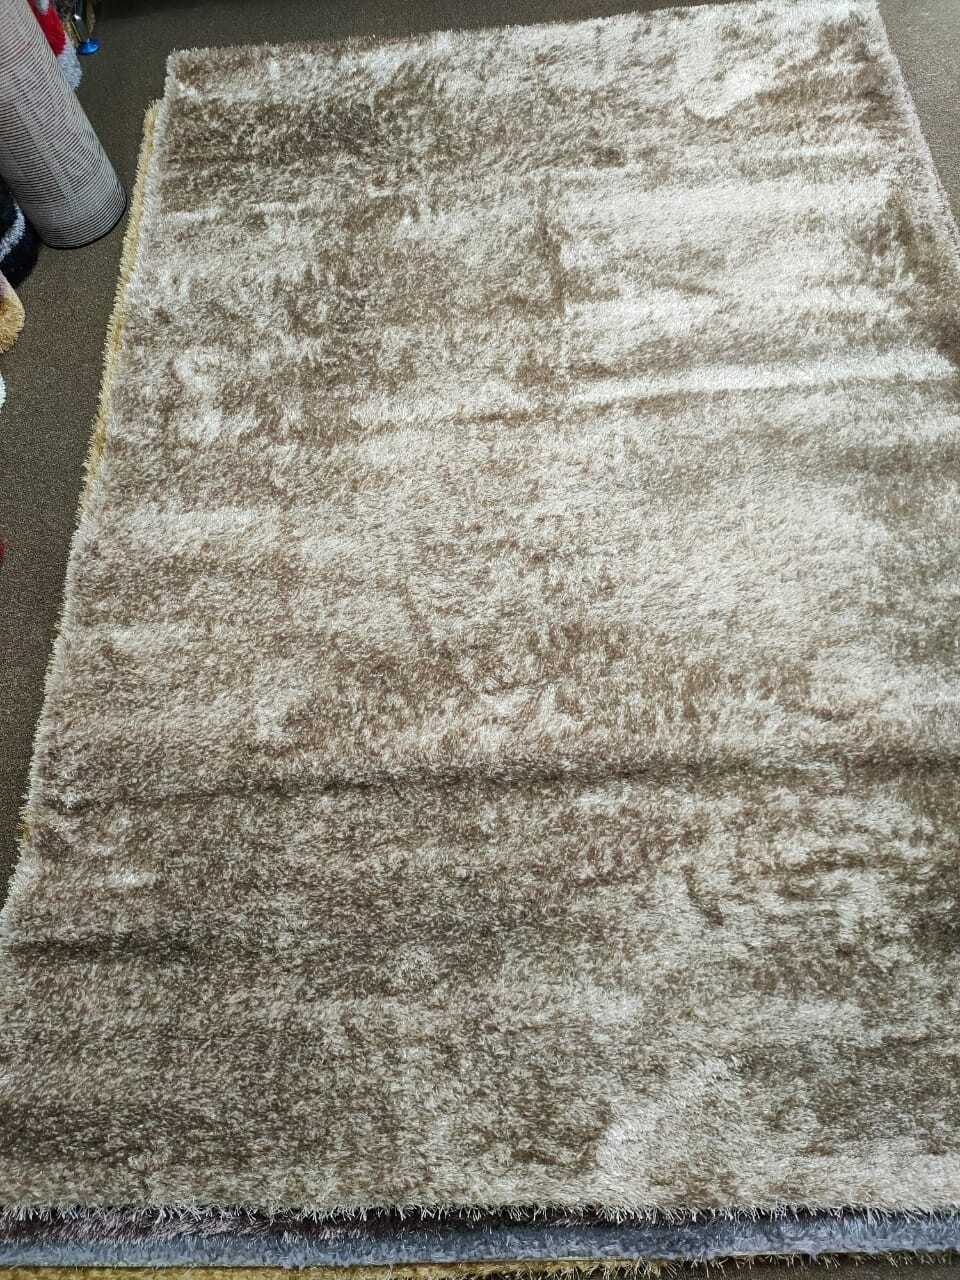 Shaggy fluffy bedroom carpet size 4x6 Spanish